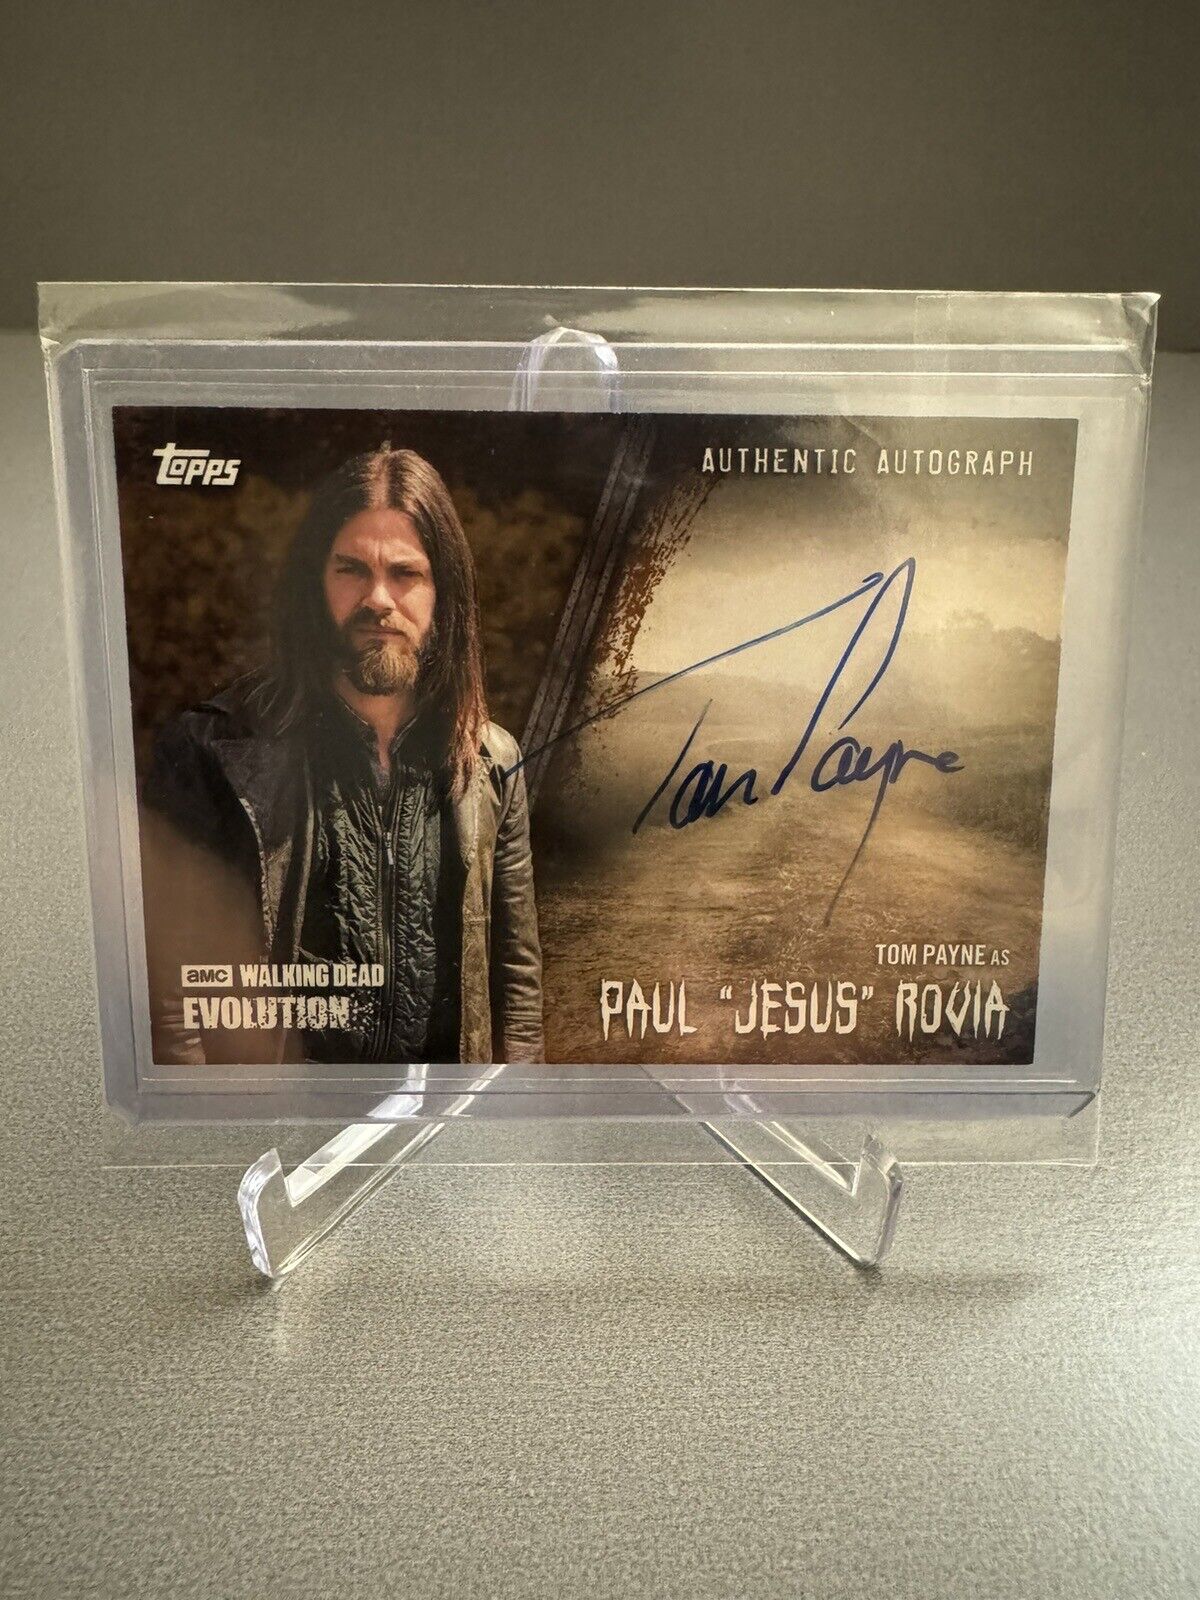 2017 Topps Tom Payne as Paul Jesus Rovia The Walking Dead Auto Autograph 90/99